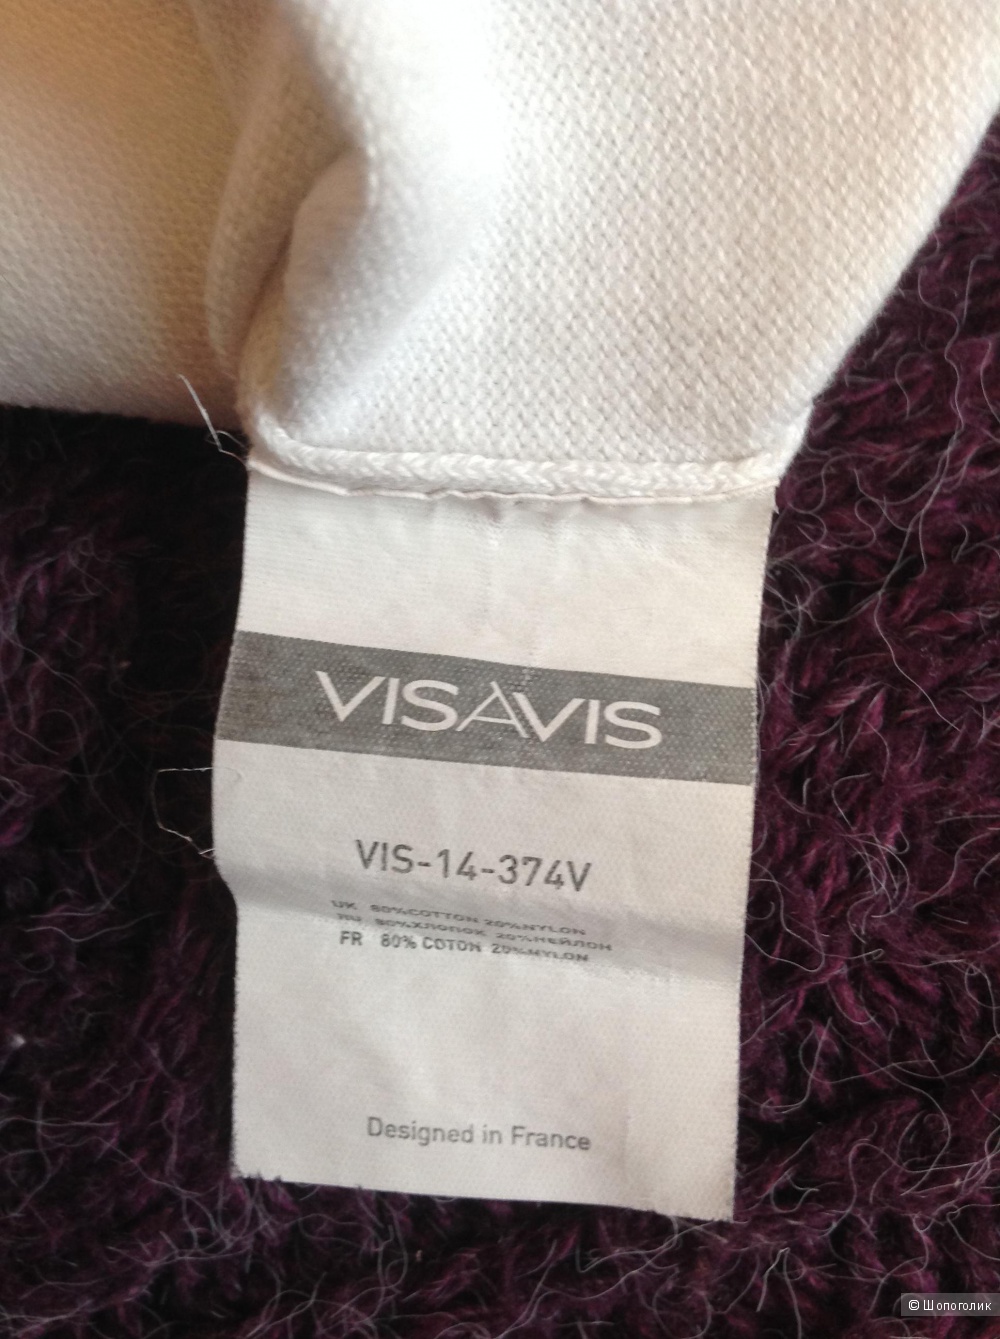 Комплект, топ/VIS-A-VIS + блузка/FUSION, разм. XS-S